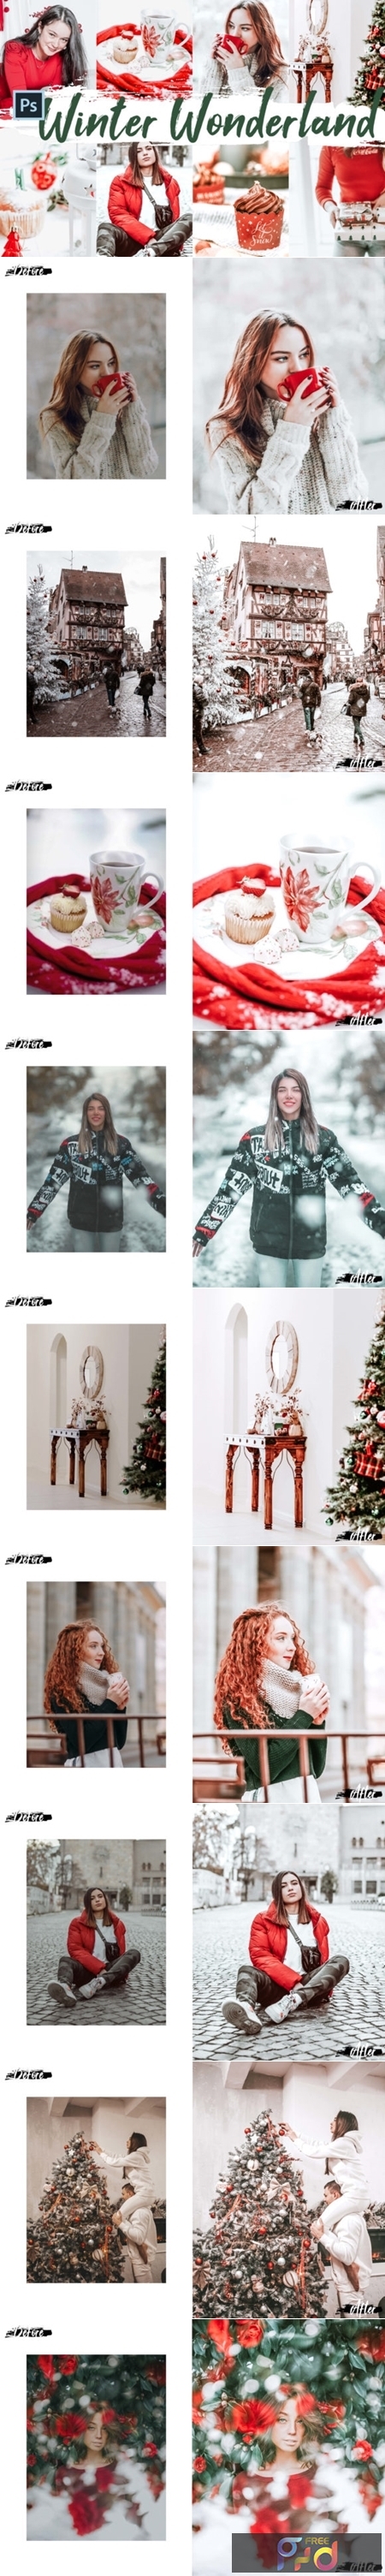 10 Winter Wonderland Photoshop Actions 2261584 1